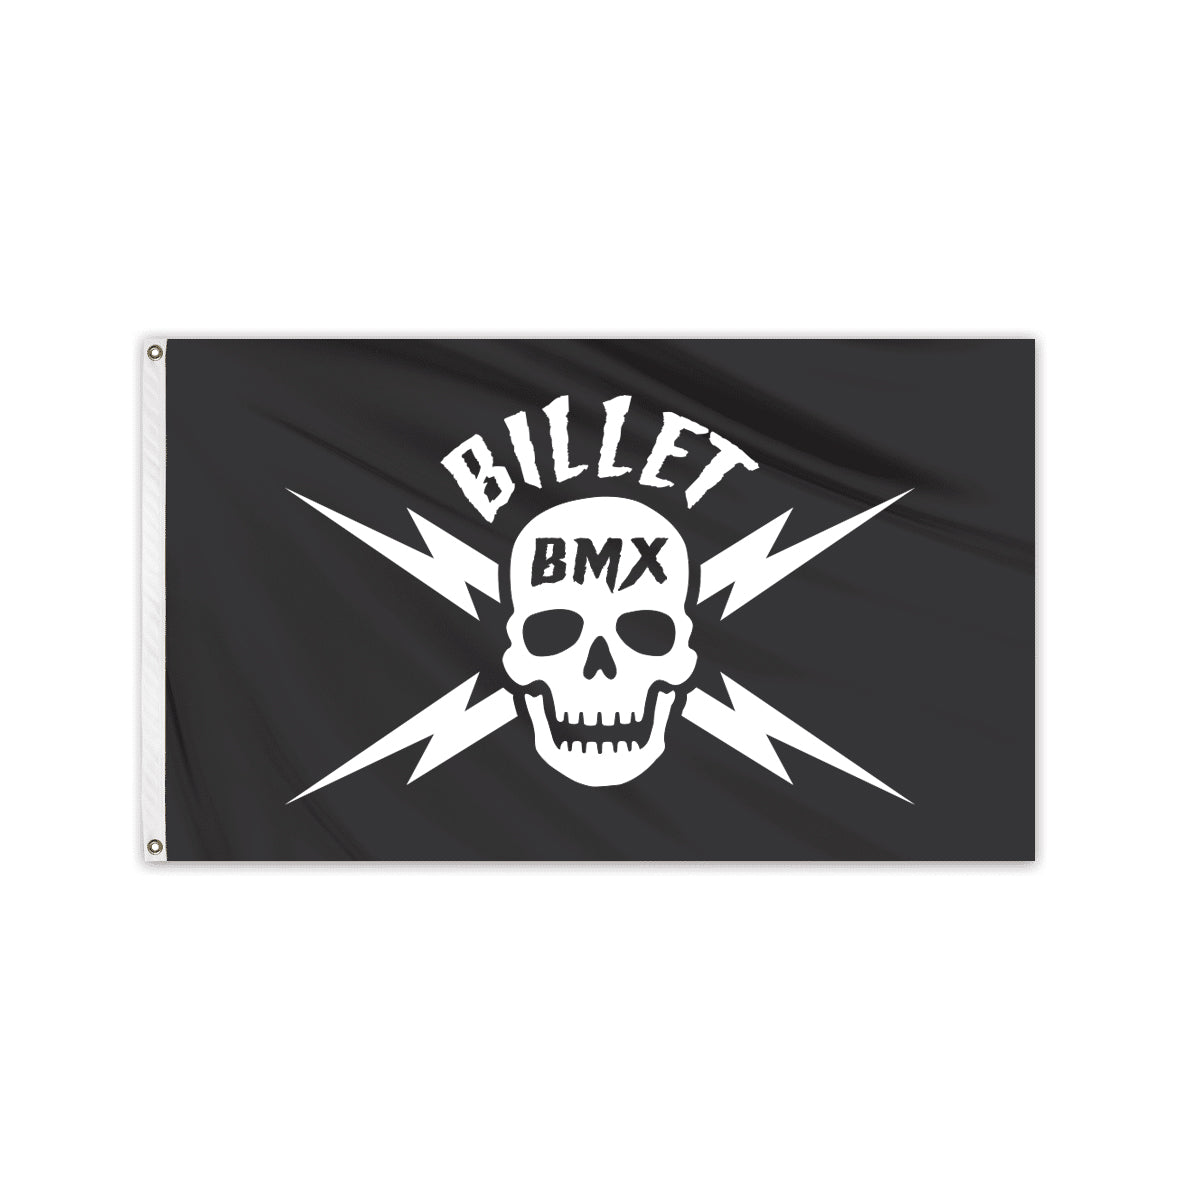 BMX Bike Accessories and parts available | BILLET BMX – BILLETBMX.COM